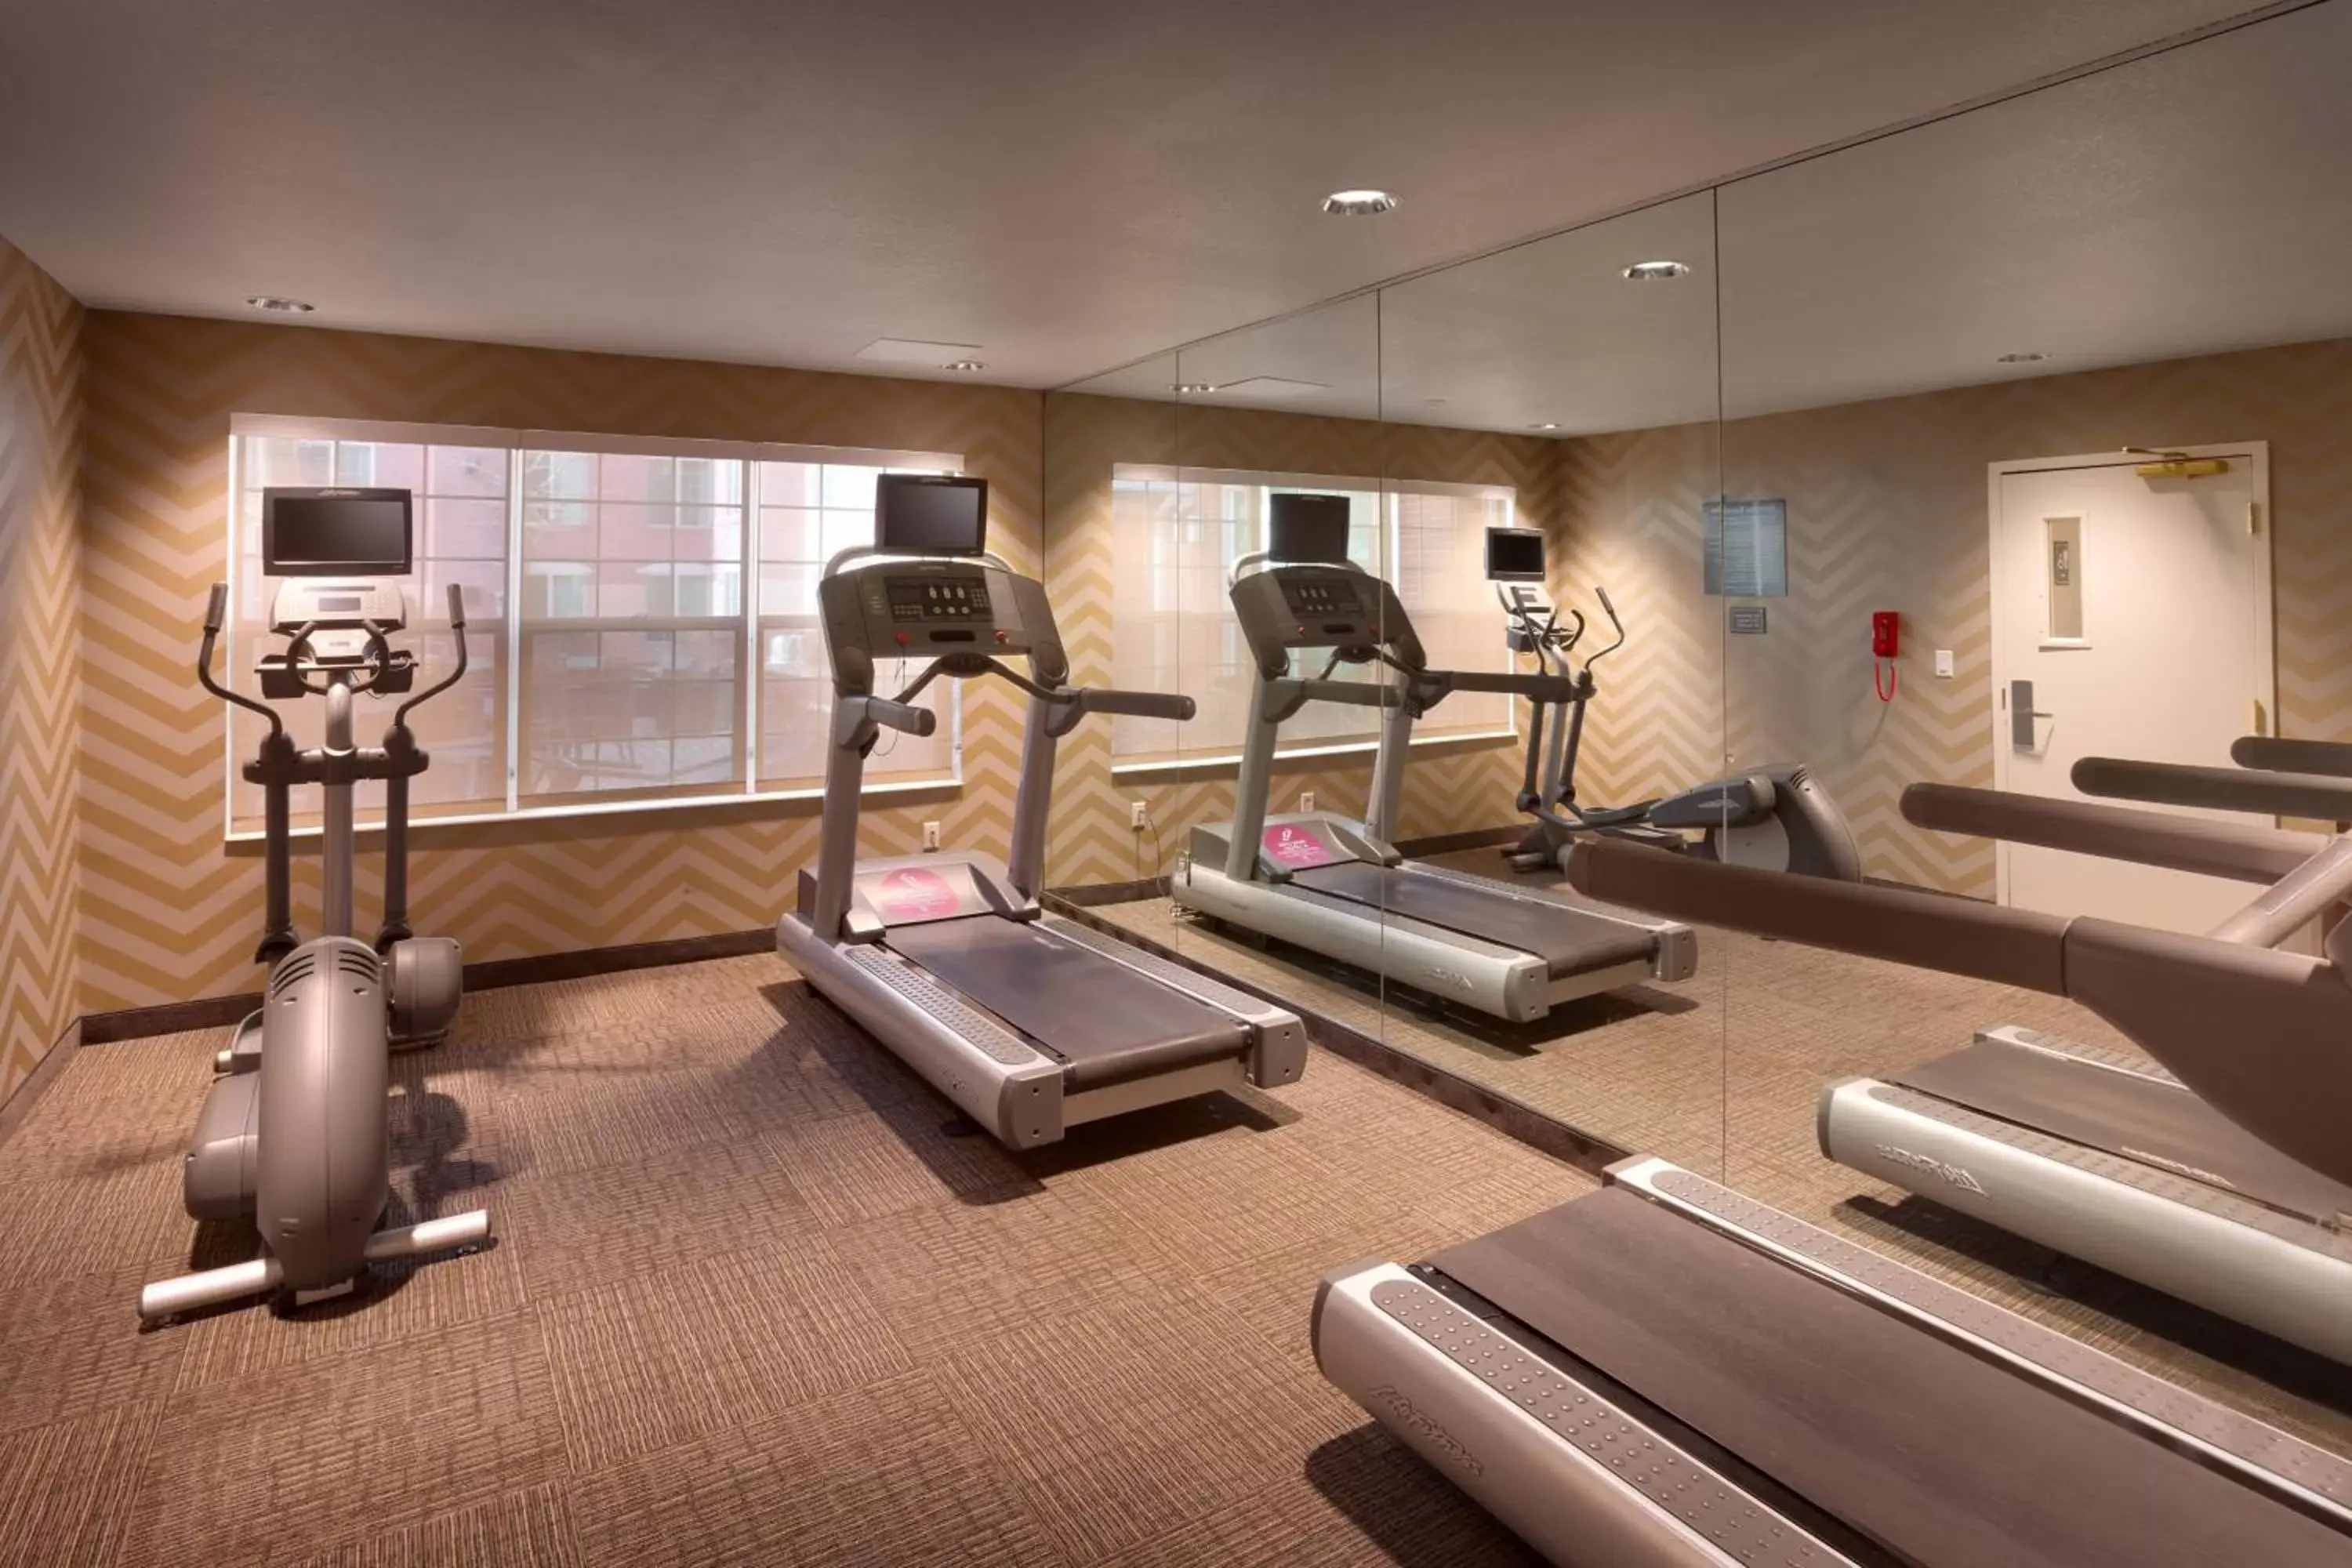 Fitness centre/facilities, Fitness Center/Facilities in Residence Inn Salt Lake City Sandy